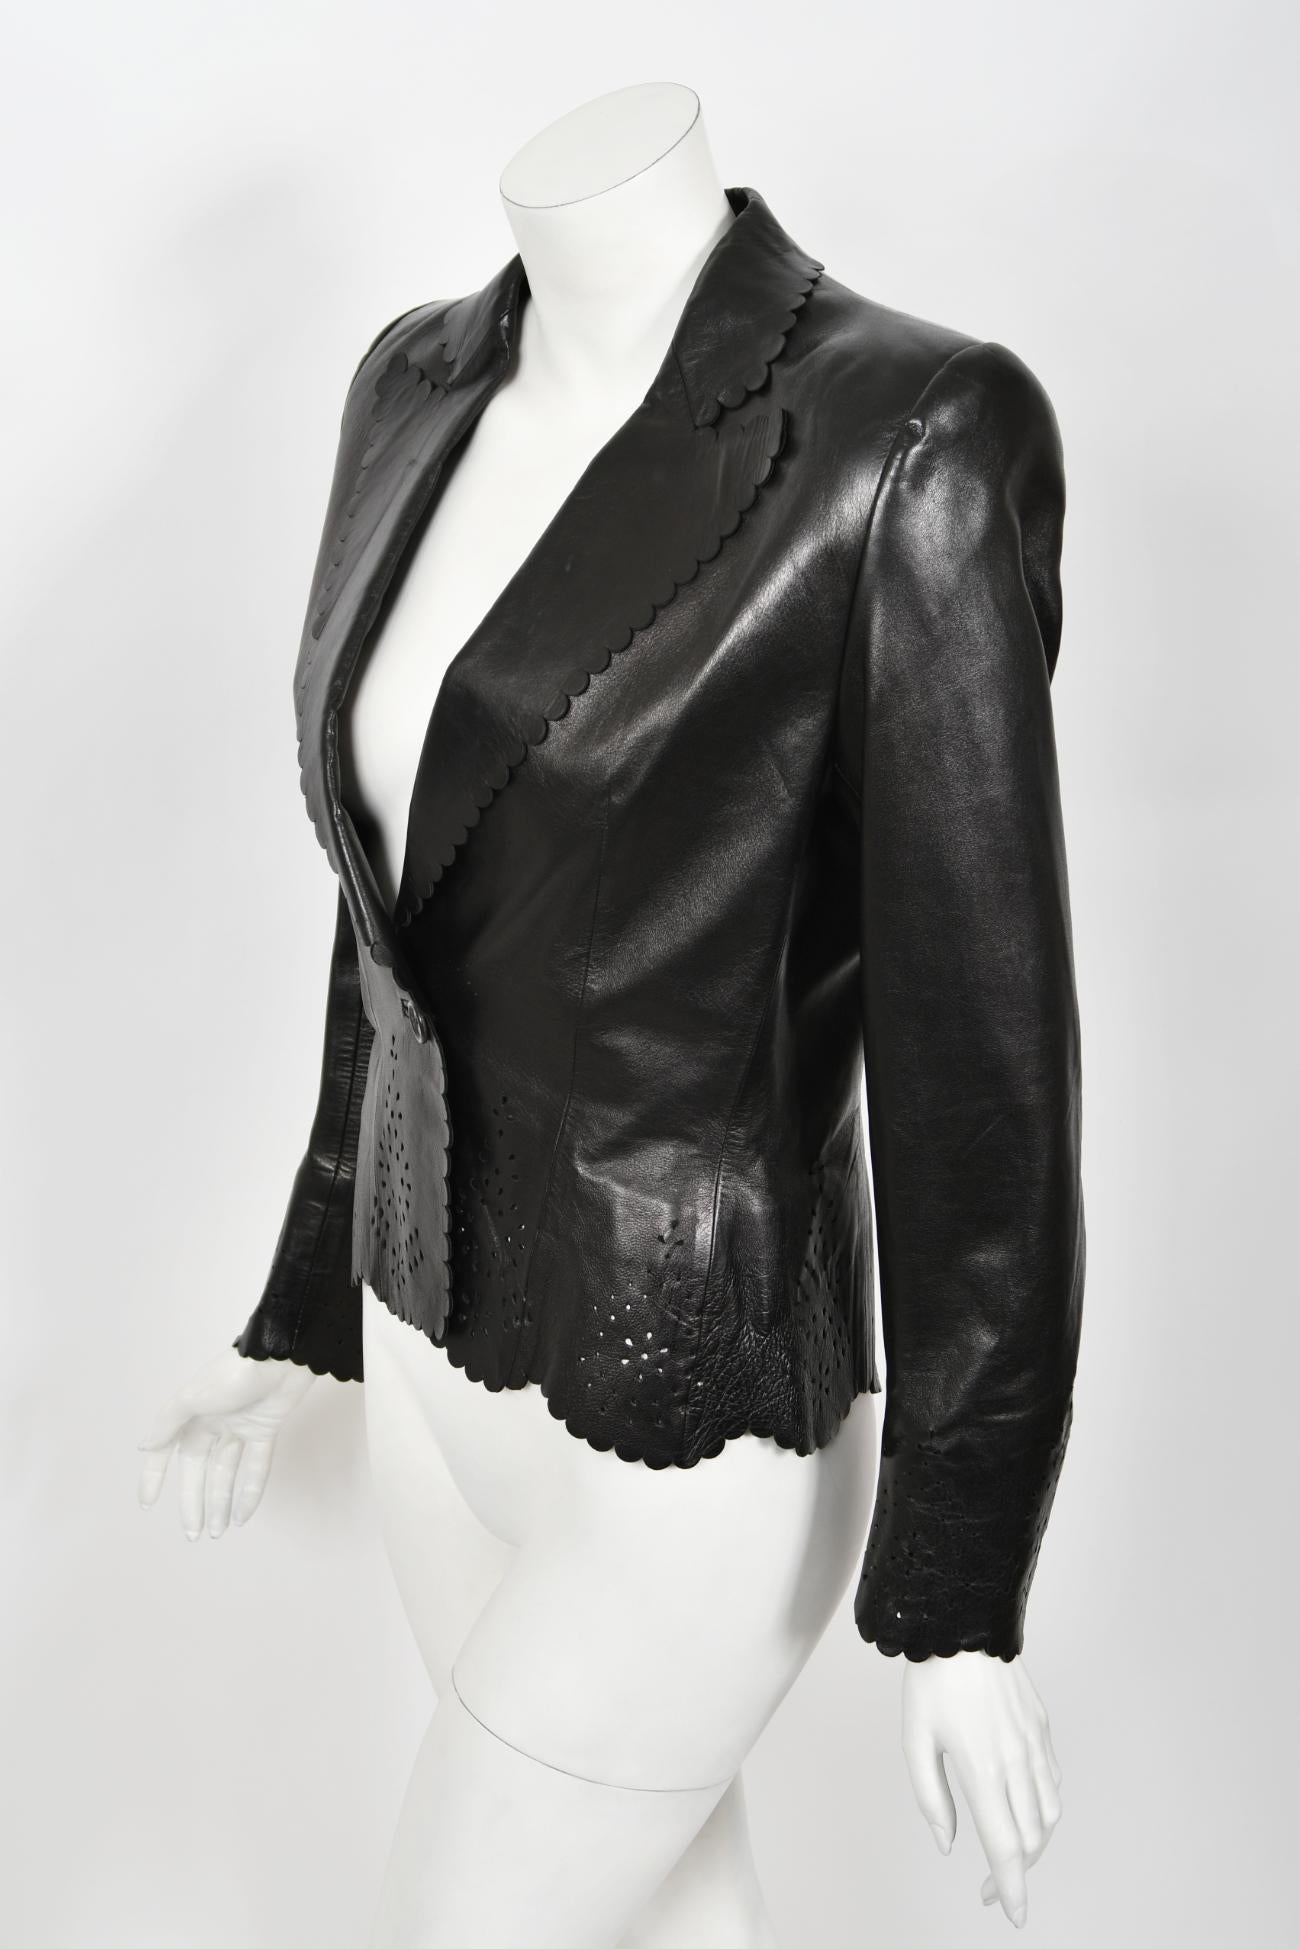 1997 Alexander Mcqueen for Givenchy Runway Black Leather Cutwork Blazer Jacket 3